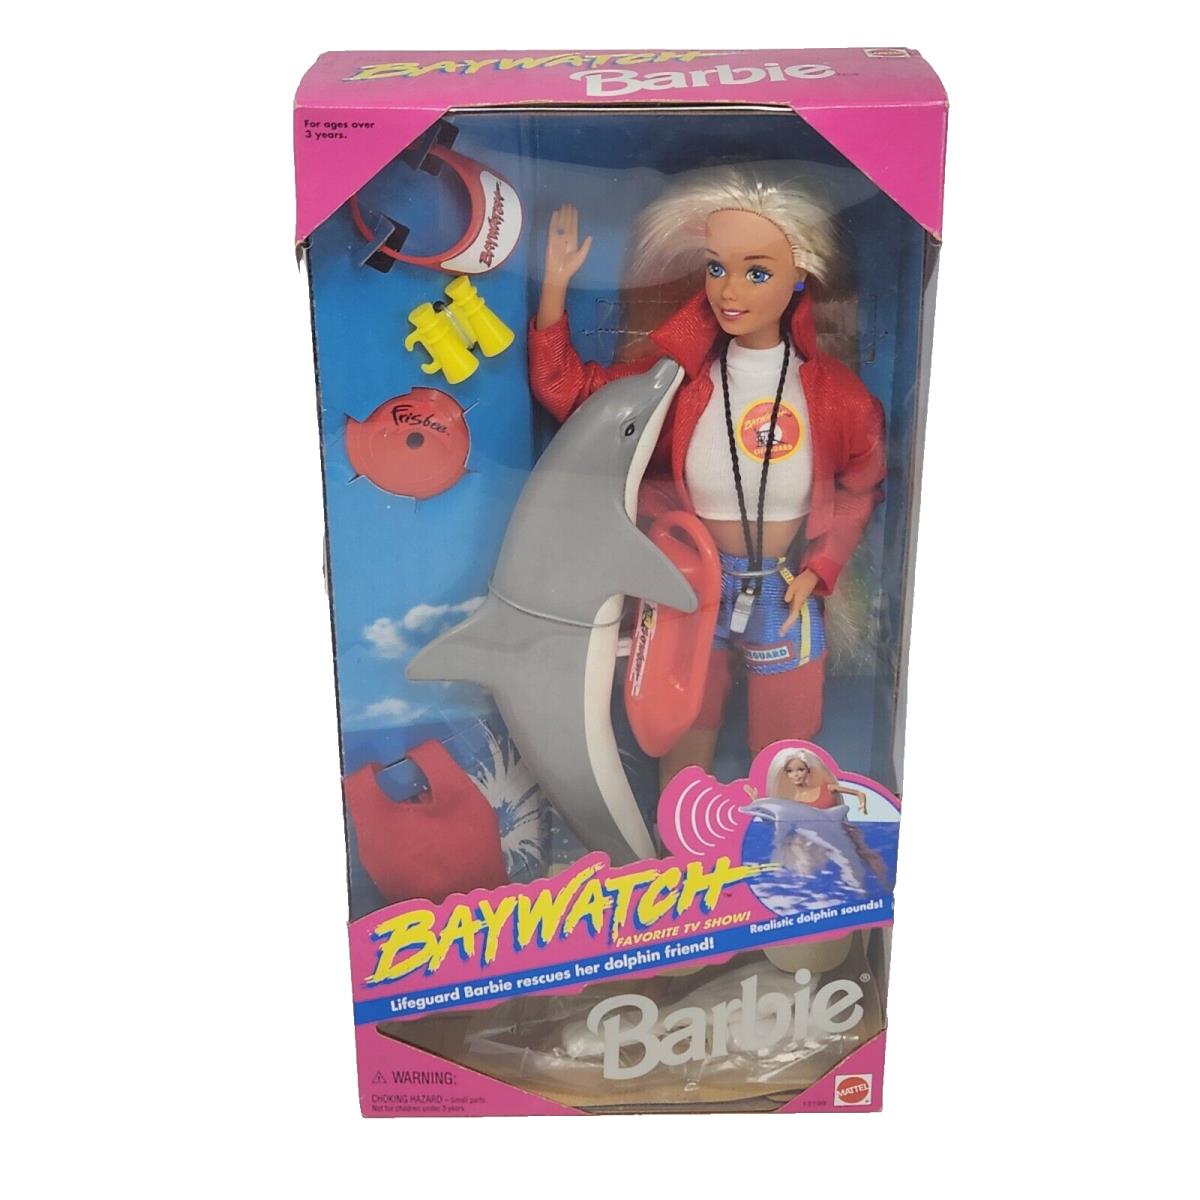 Vintage 1994 Baywatch Lifeguard Barbie W Dolphin 13199 IN Box Mattel